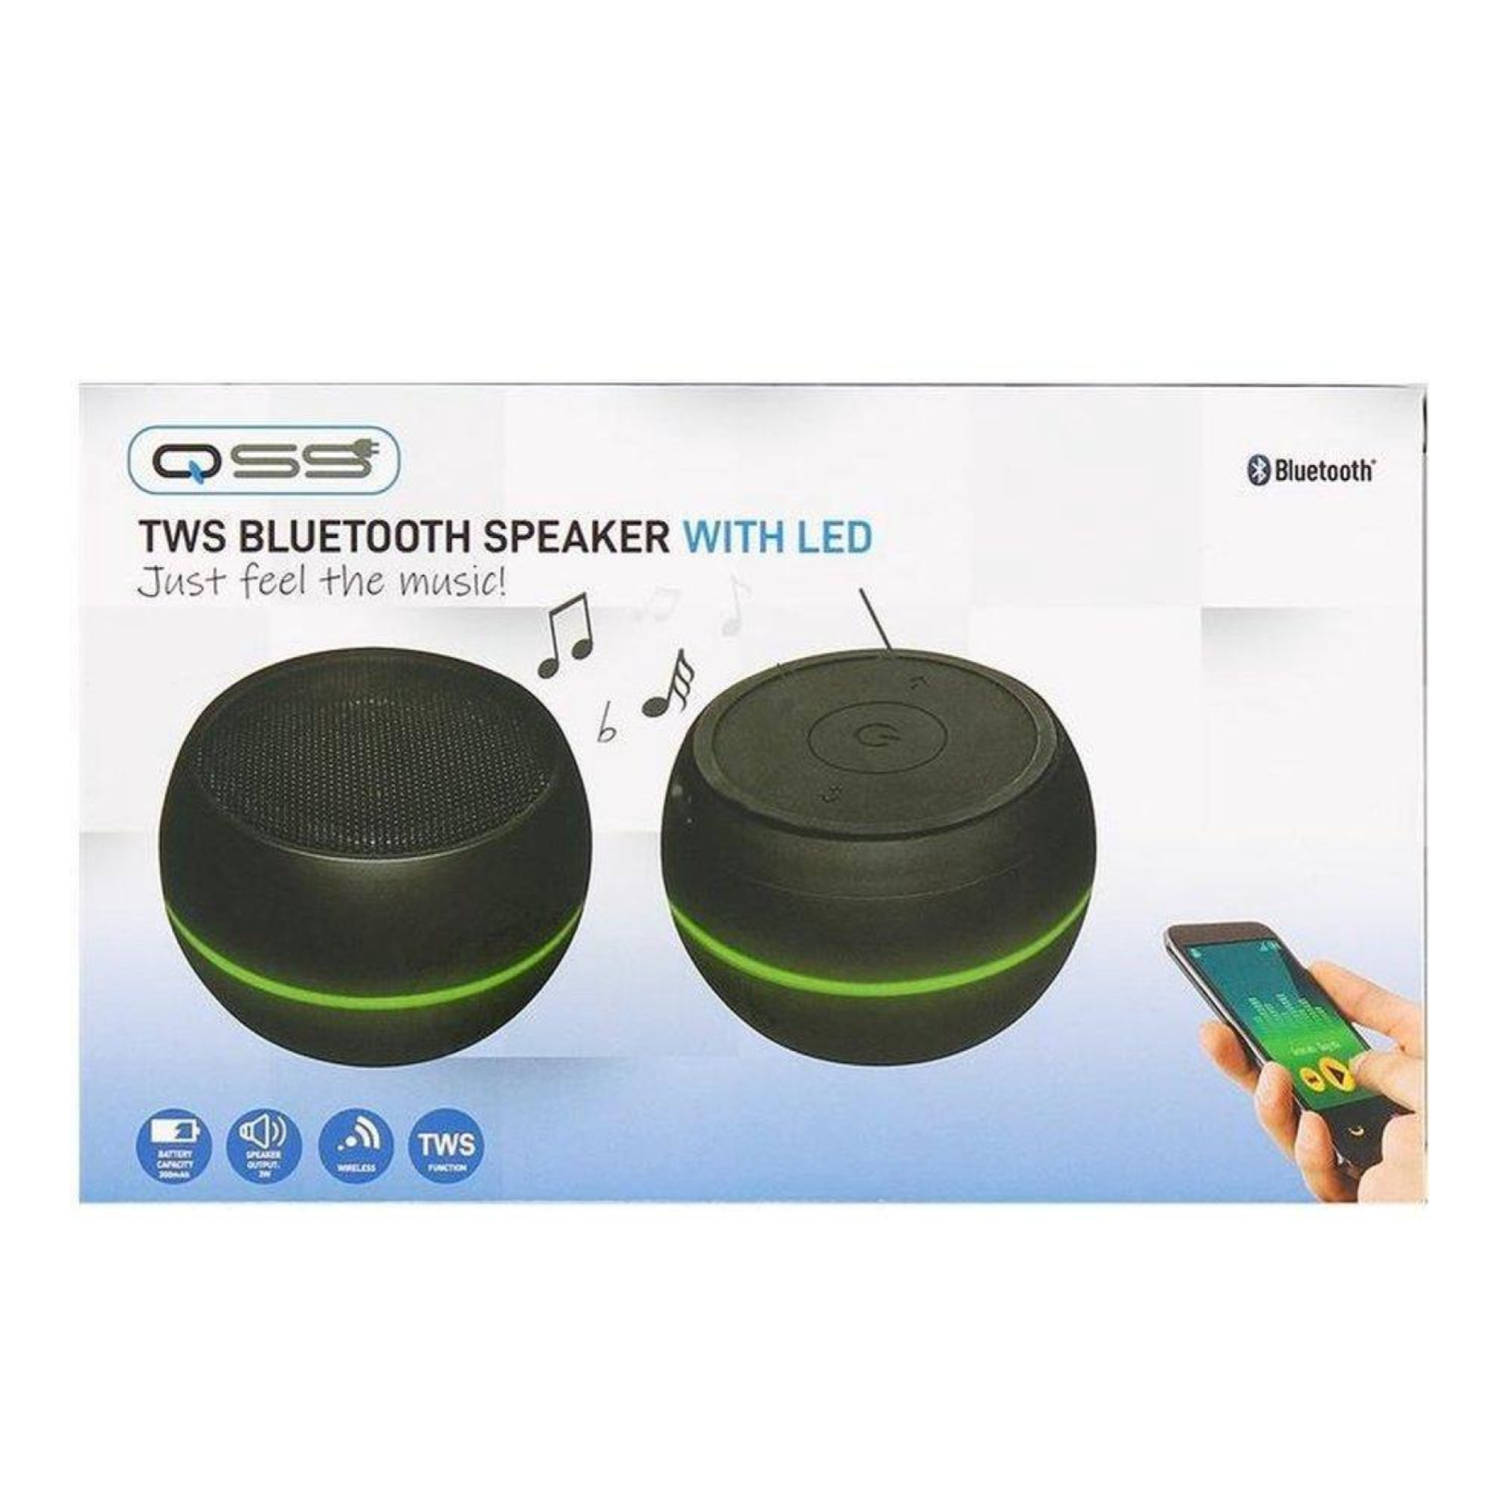 QSS bluetooth speakers met ledlicht